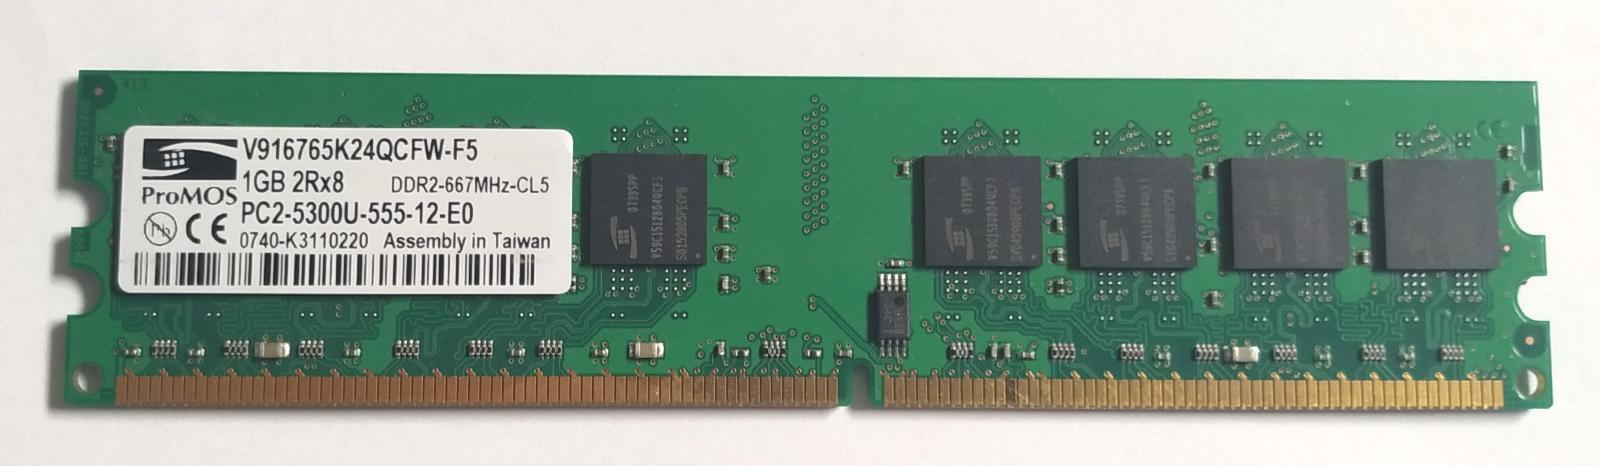 Pamäť RAM do PC Promos V916765K24QCFW-F5 1GB 667MHz DDR2 - Počítače a hry